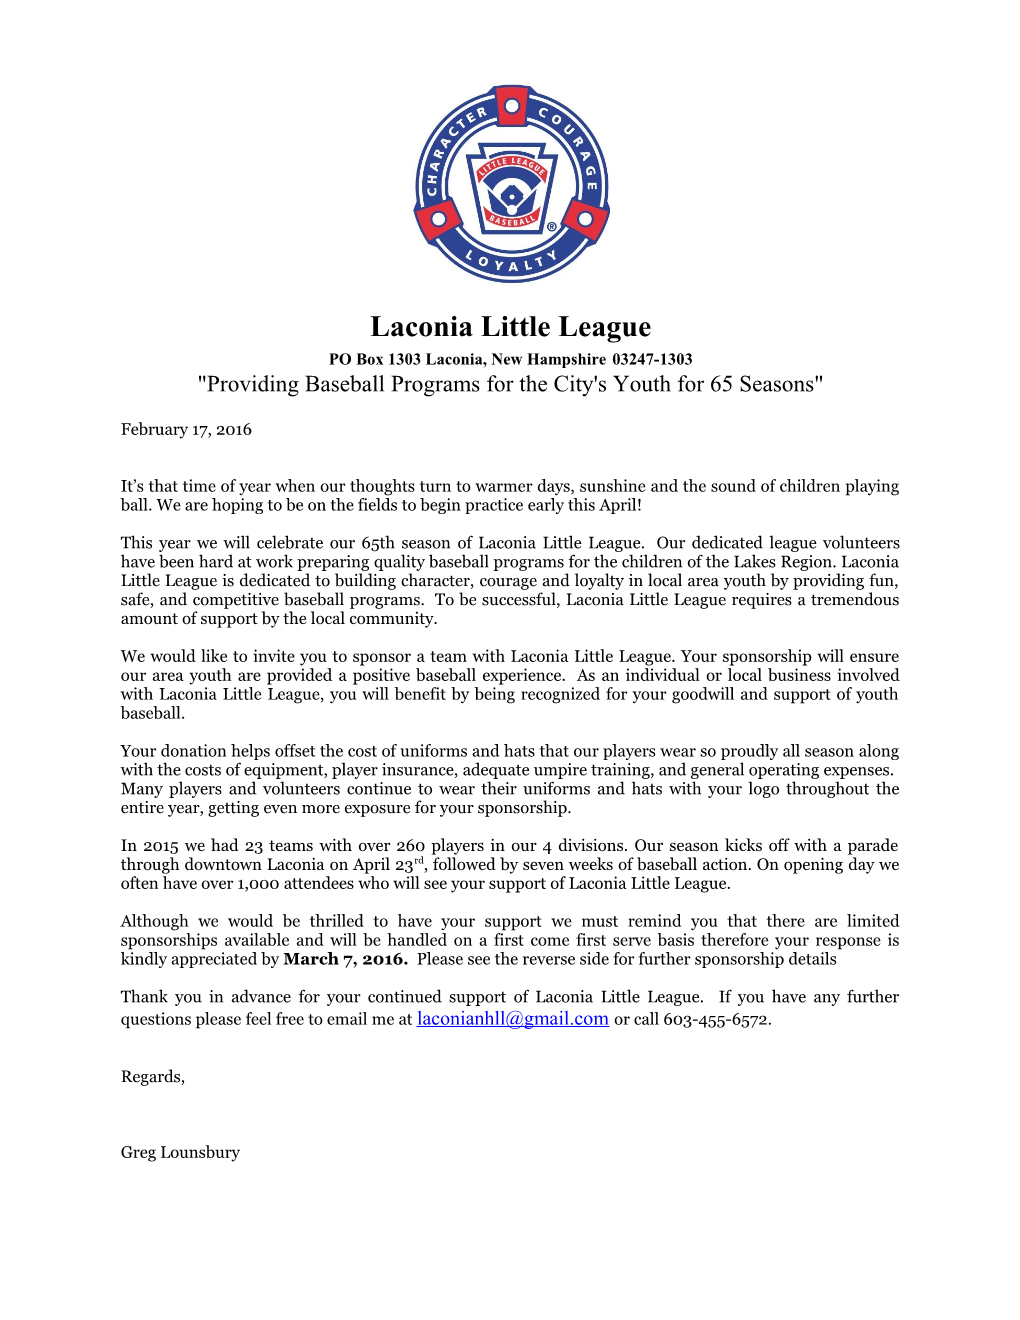 Dear Laconia Little League Softball Families